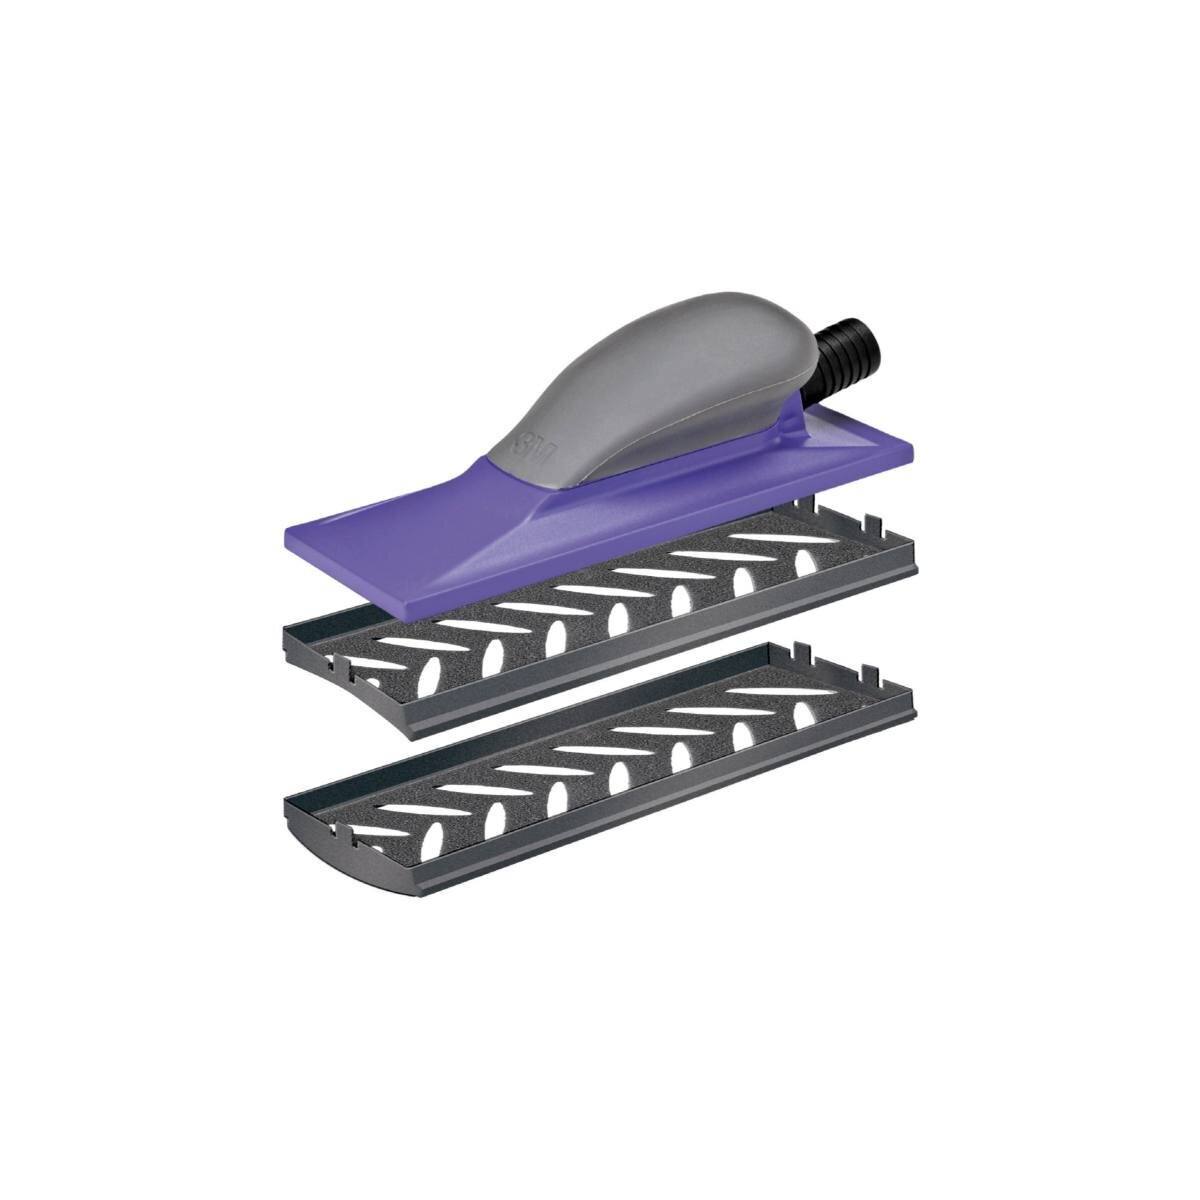 3M Hookit Purple Premium juego adaptador molde redondo 70mmx127mm #50728